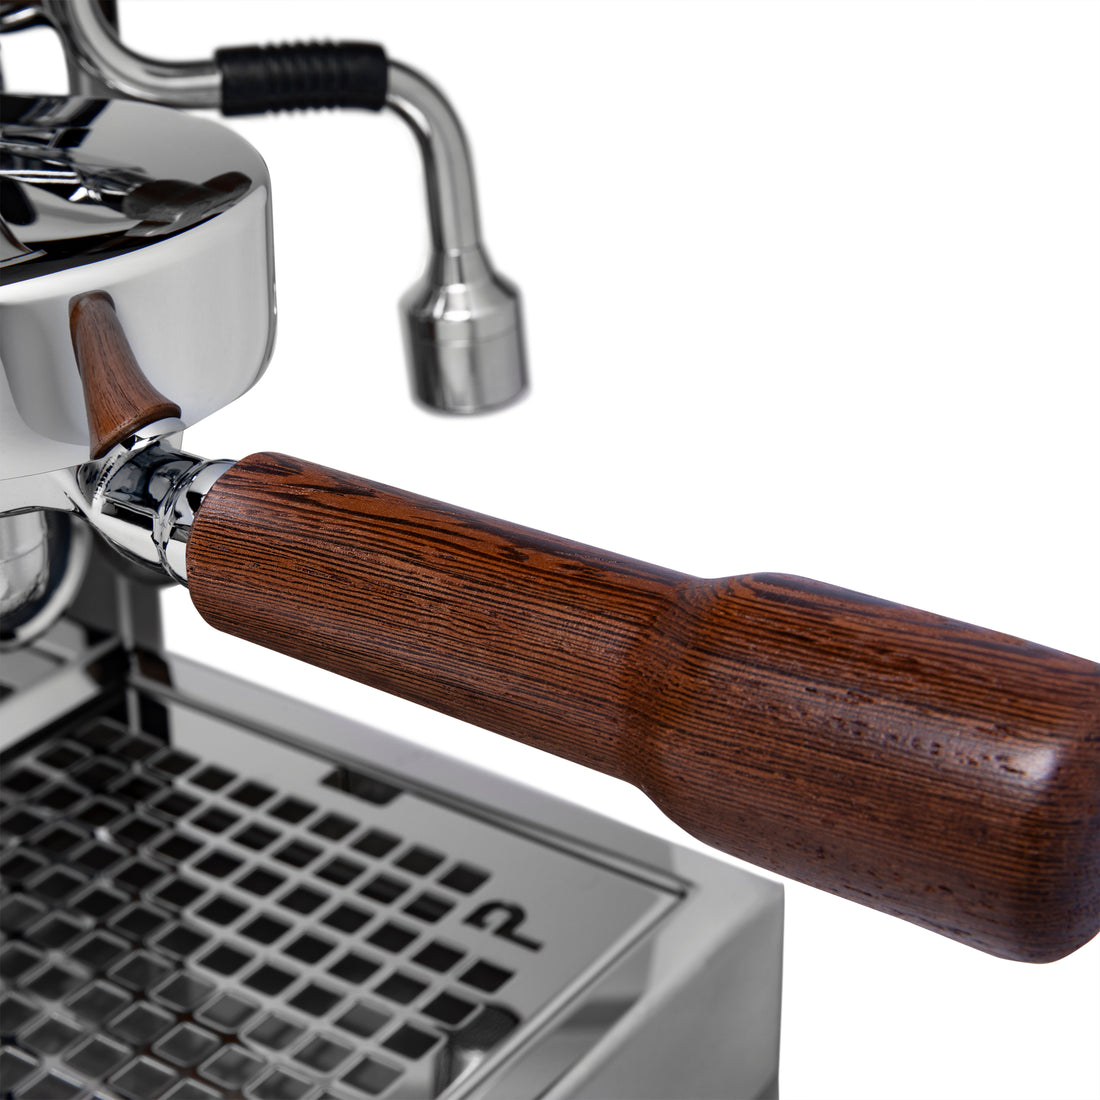 Profitec Pro 500 PID Espresso Machine with Wenge Accents